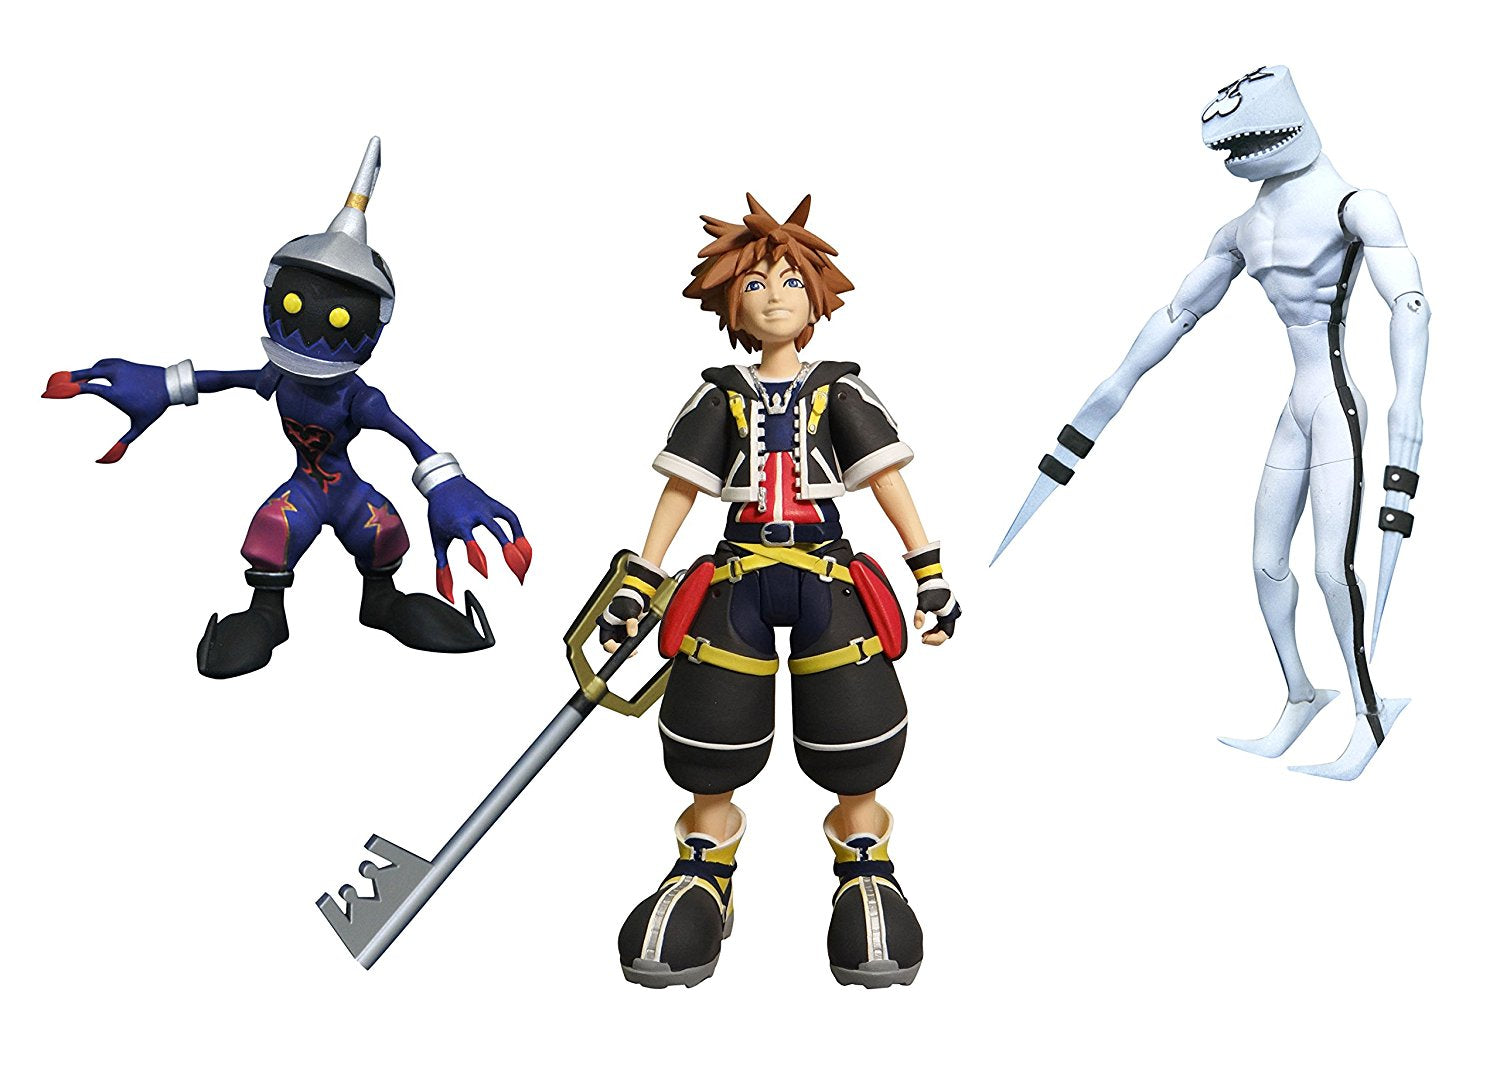 Diamond Kingdom Hearts Select Sora, Dusk, and Soldier Action Figure Set